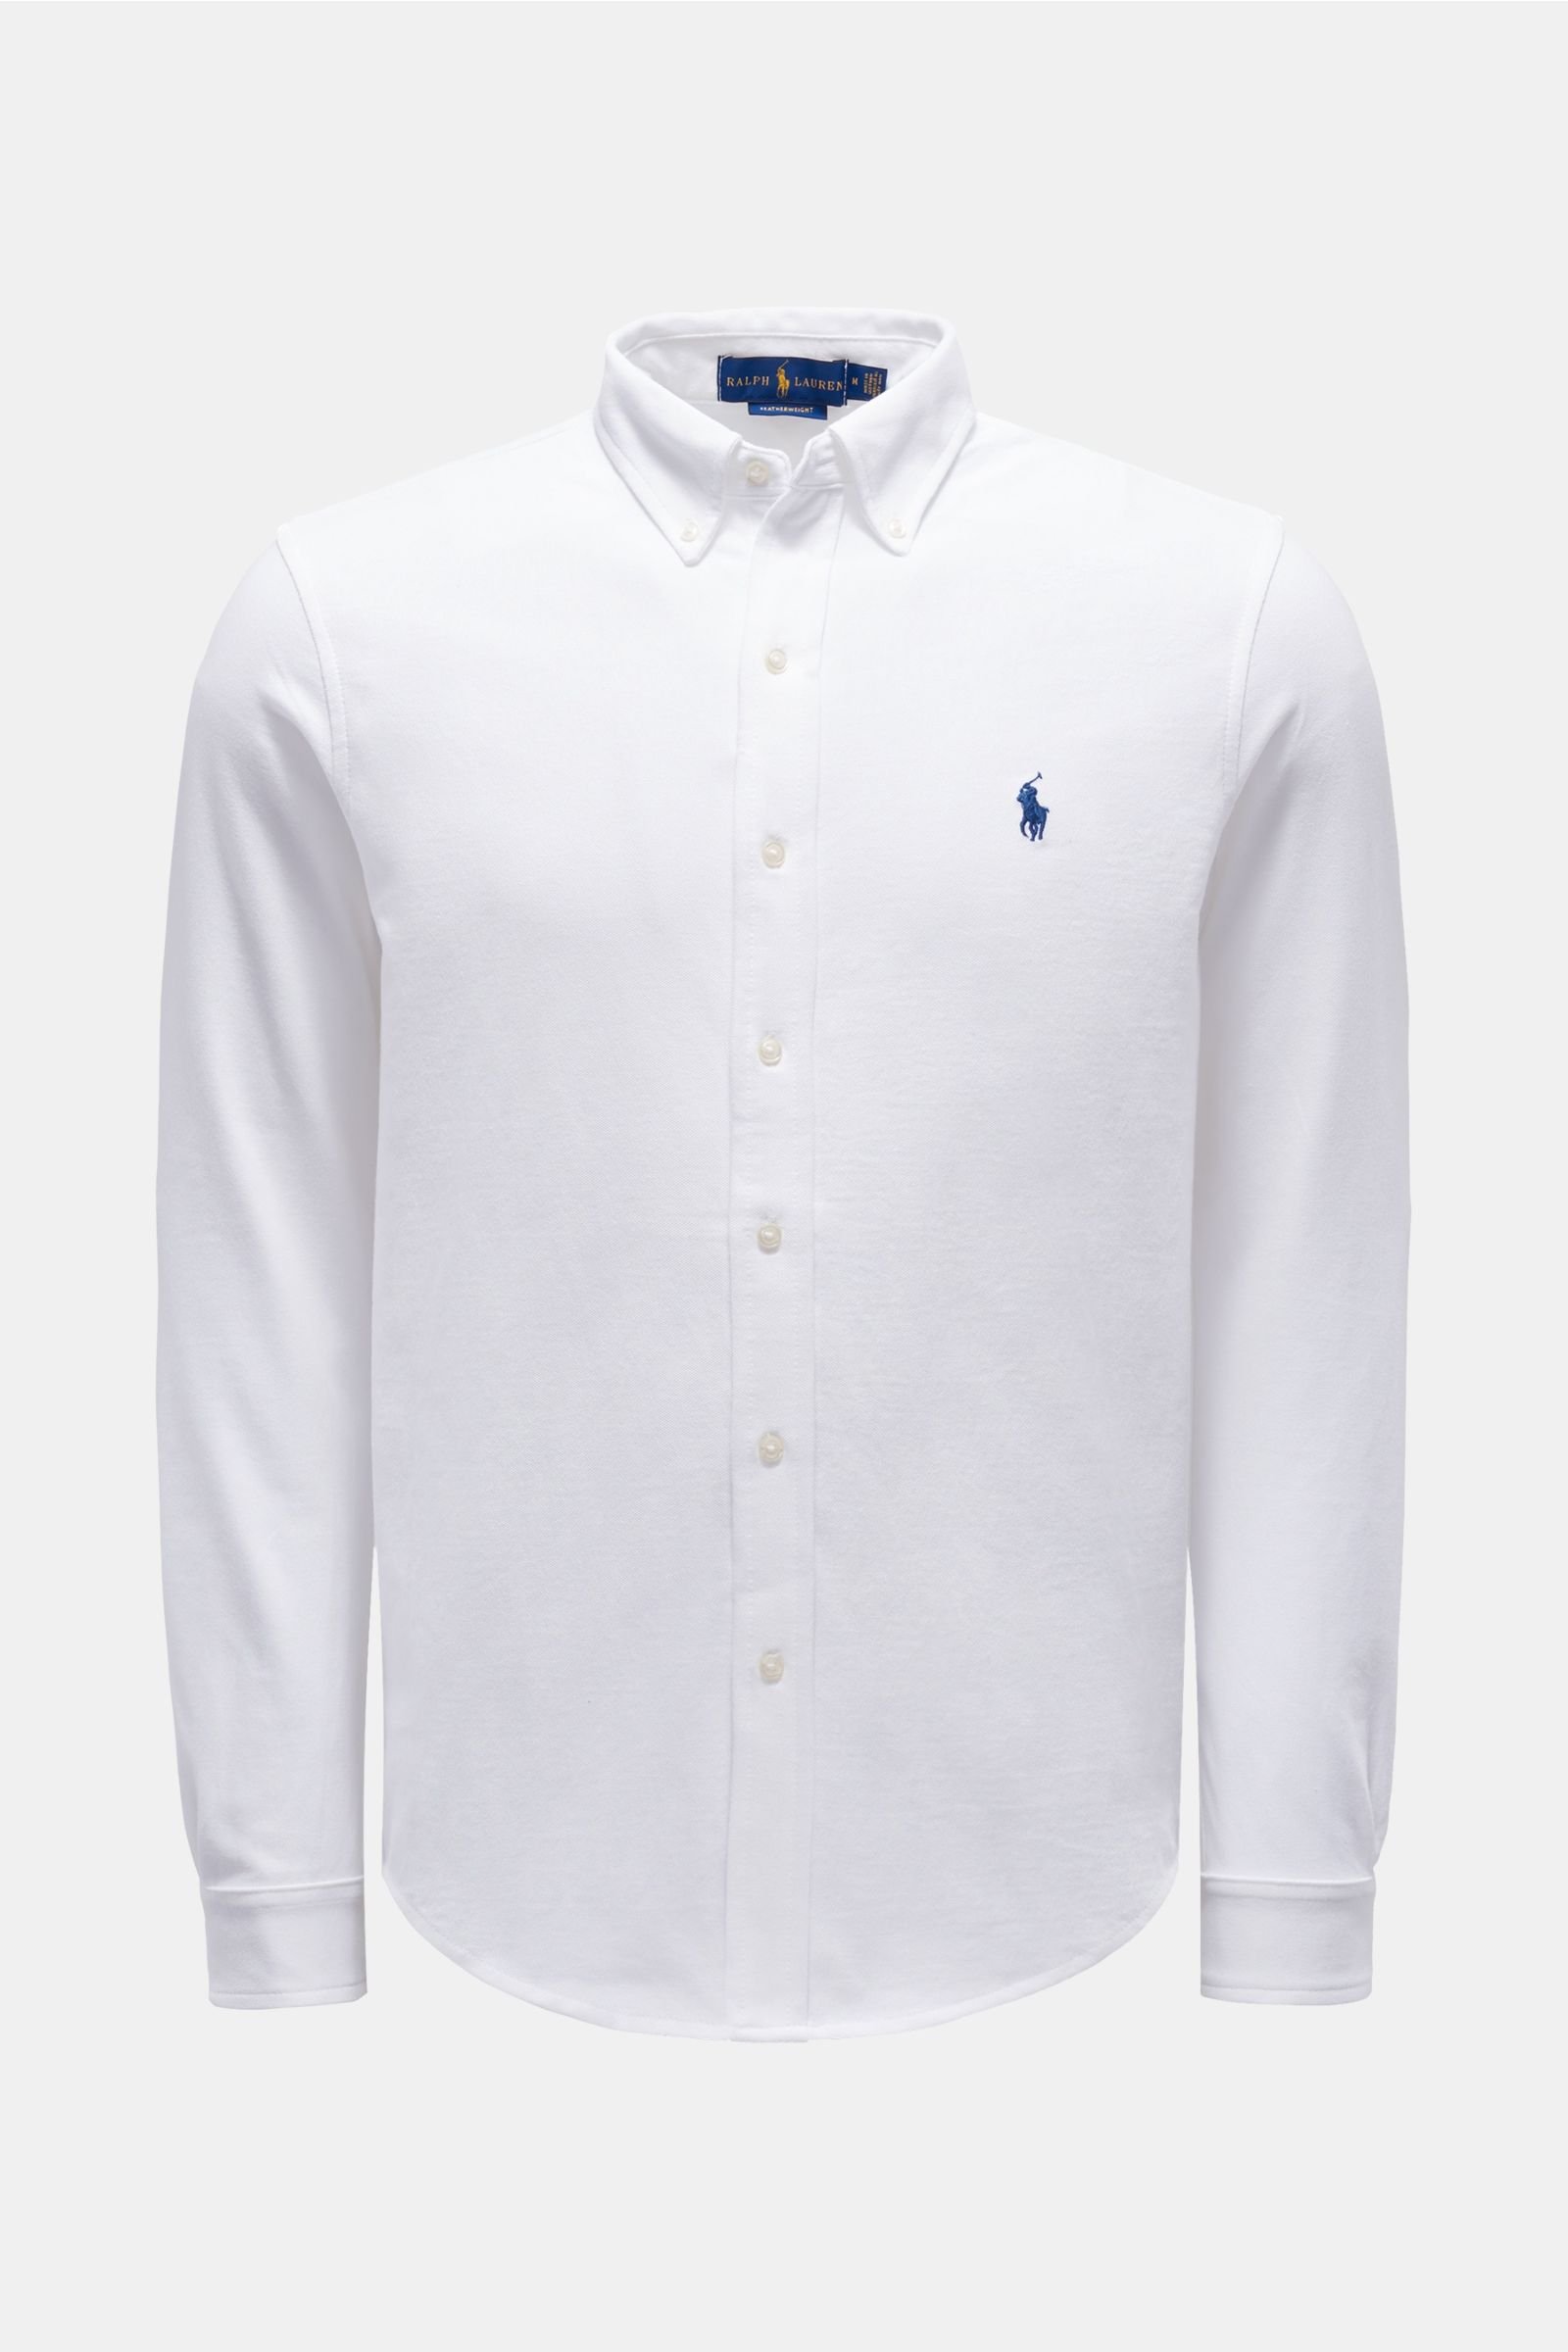 Jersey shirt button-down collar white